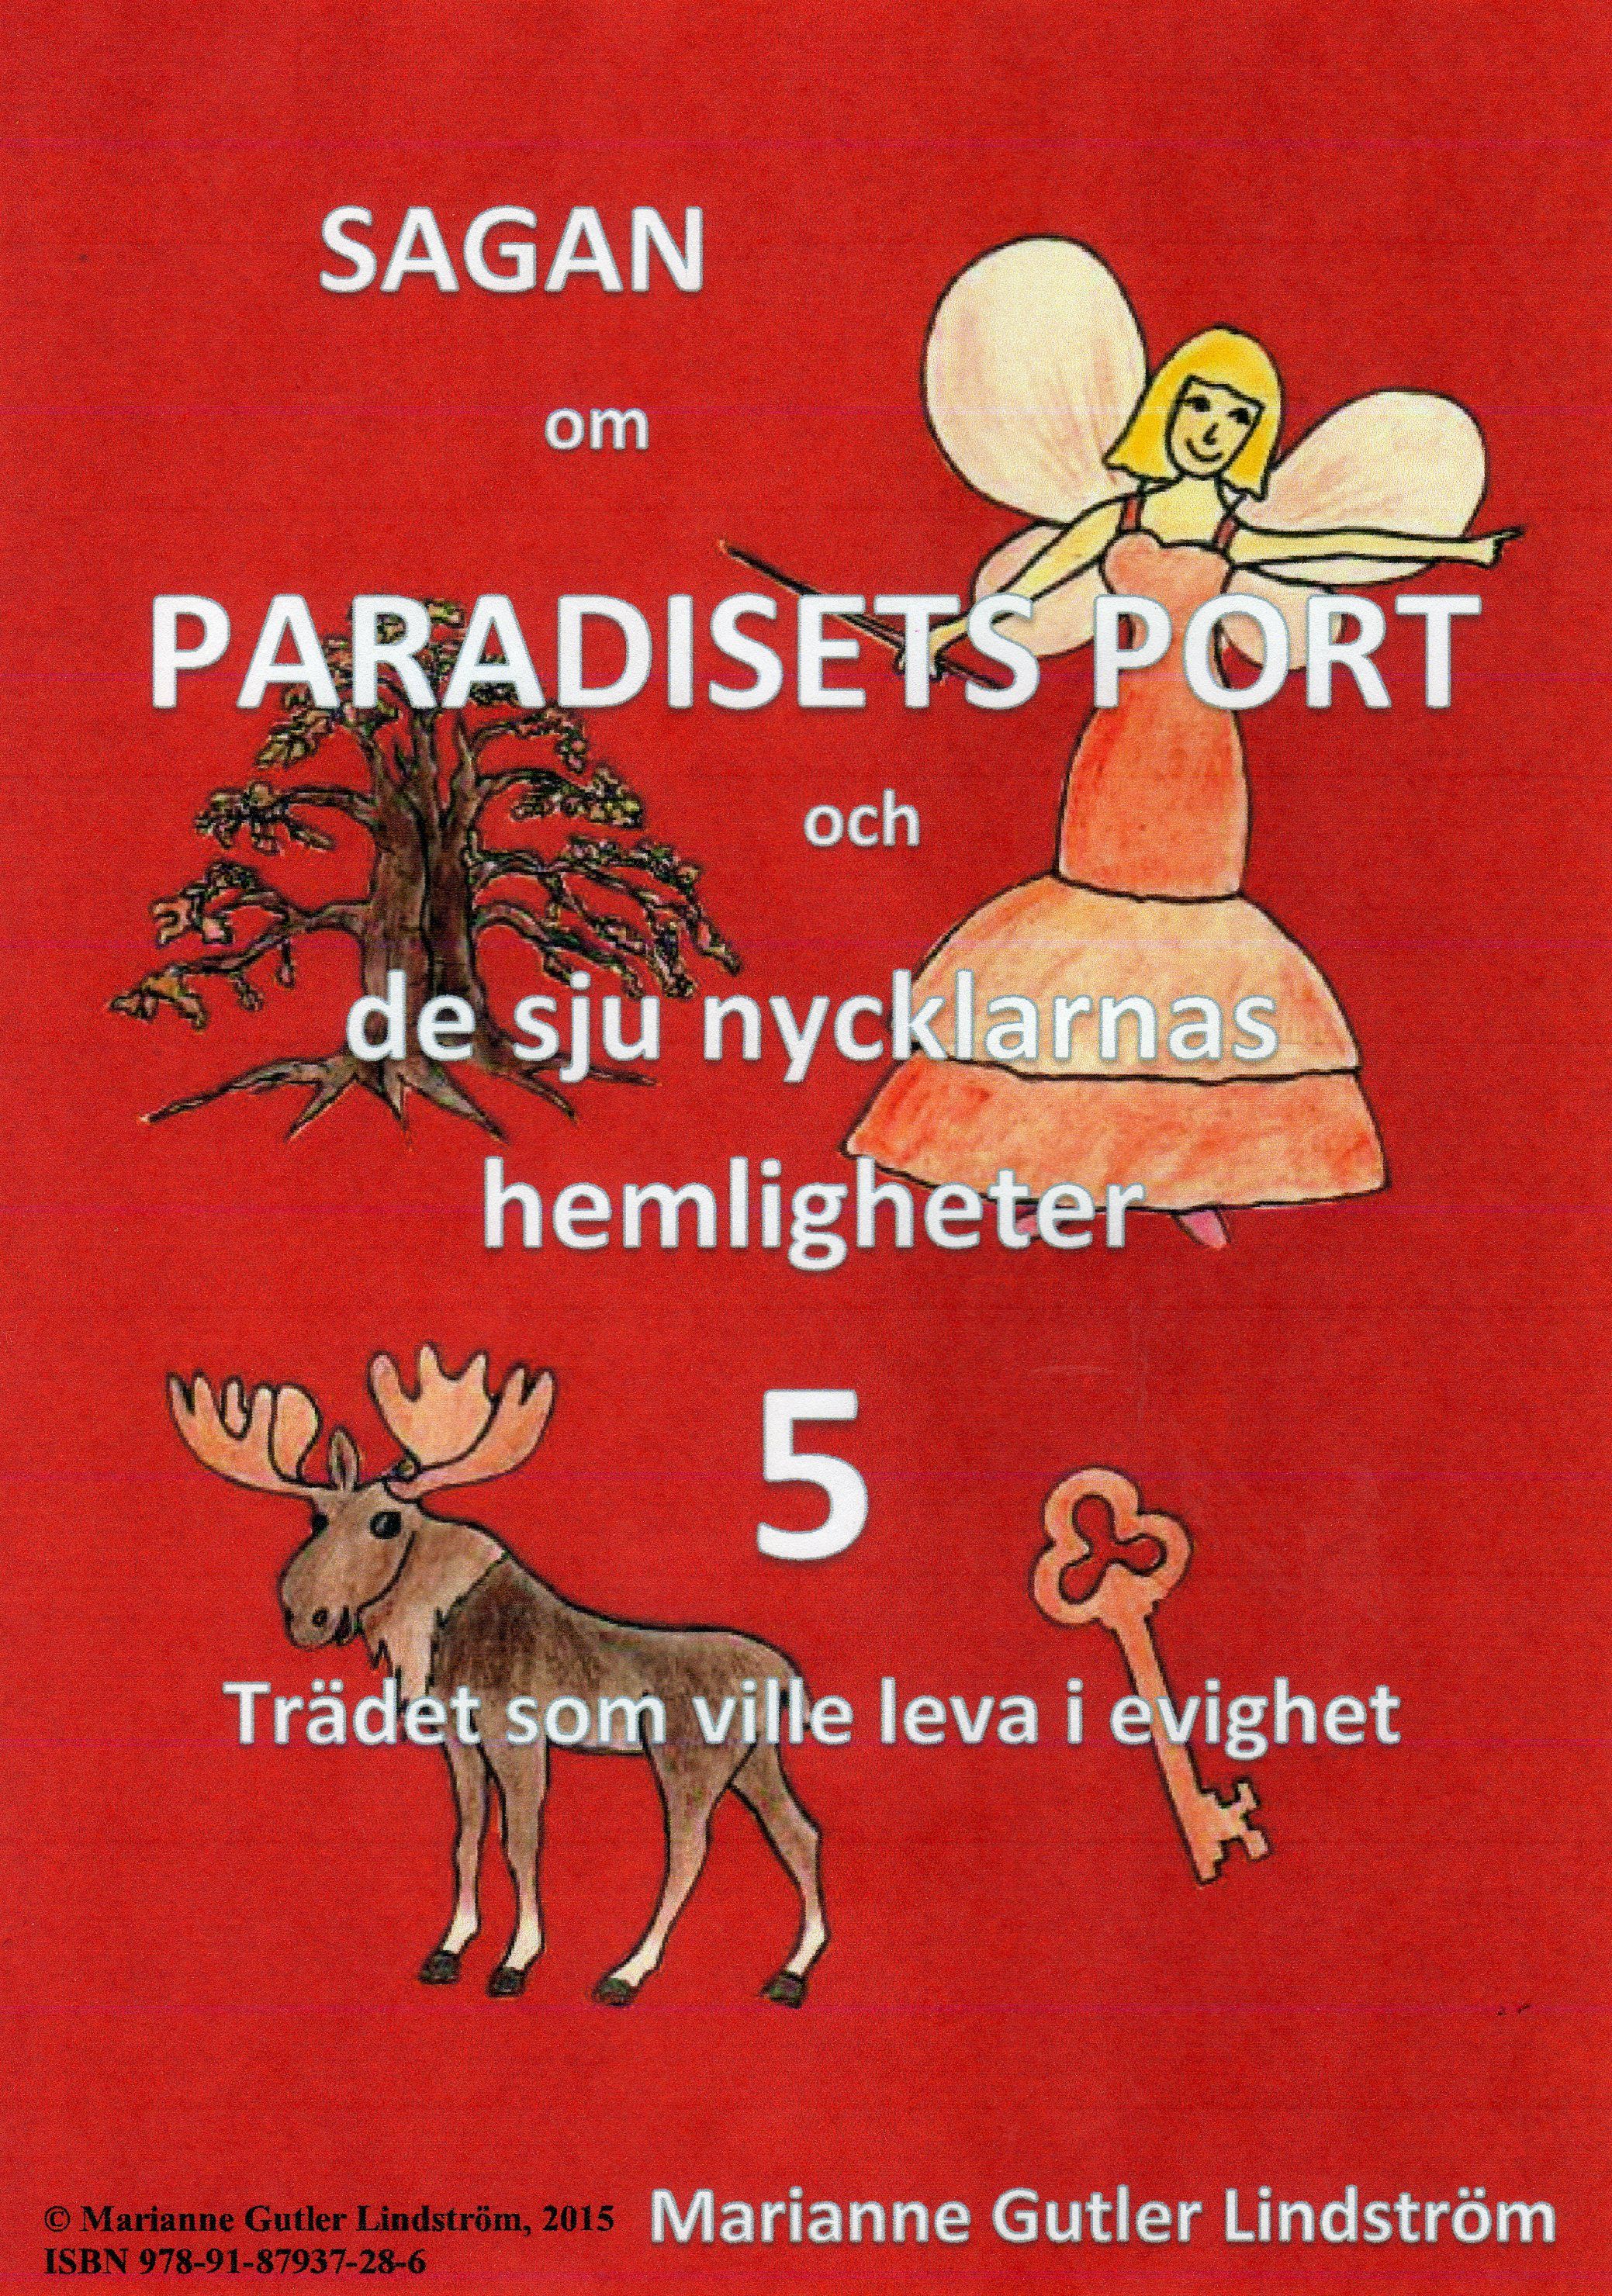 Sagan om Paradisets Port 5 Trädet som ville leva i evighet, eBook by Marianne Gutler Lindström